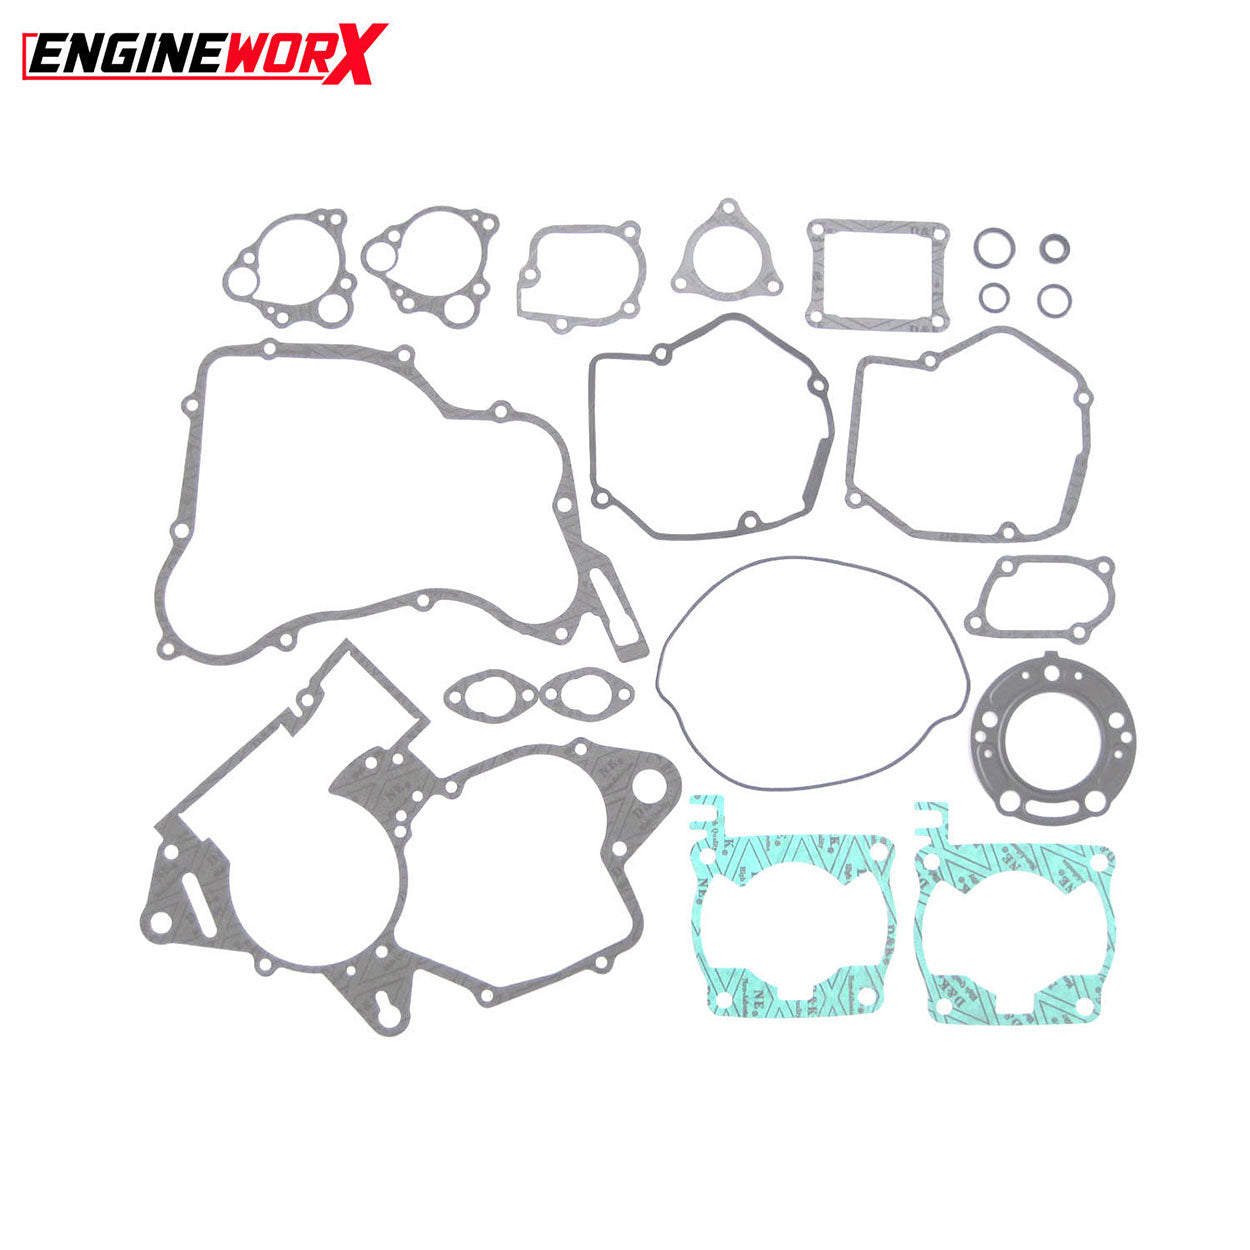 Engineworx Full Gasket Kit Honda CR 125 01-02